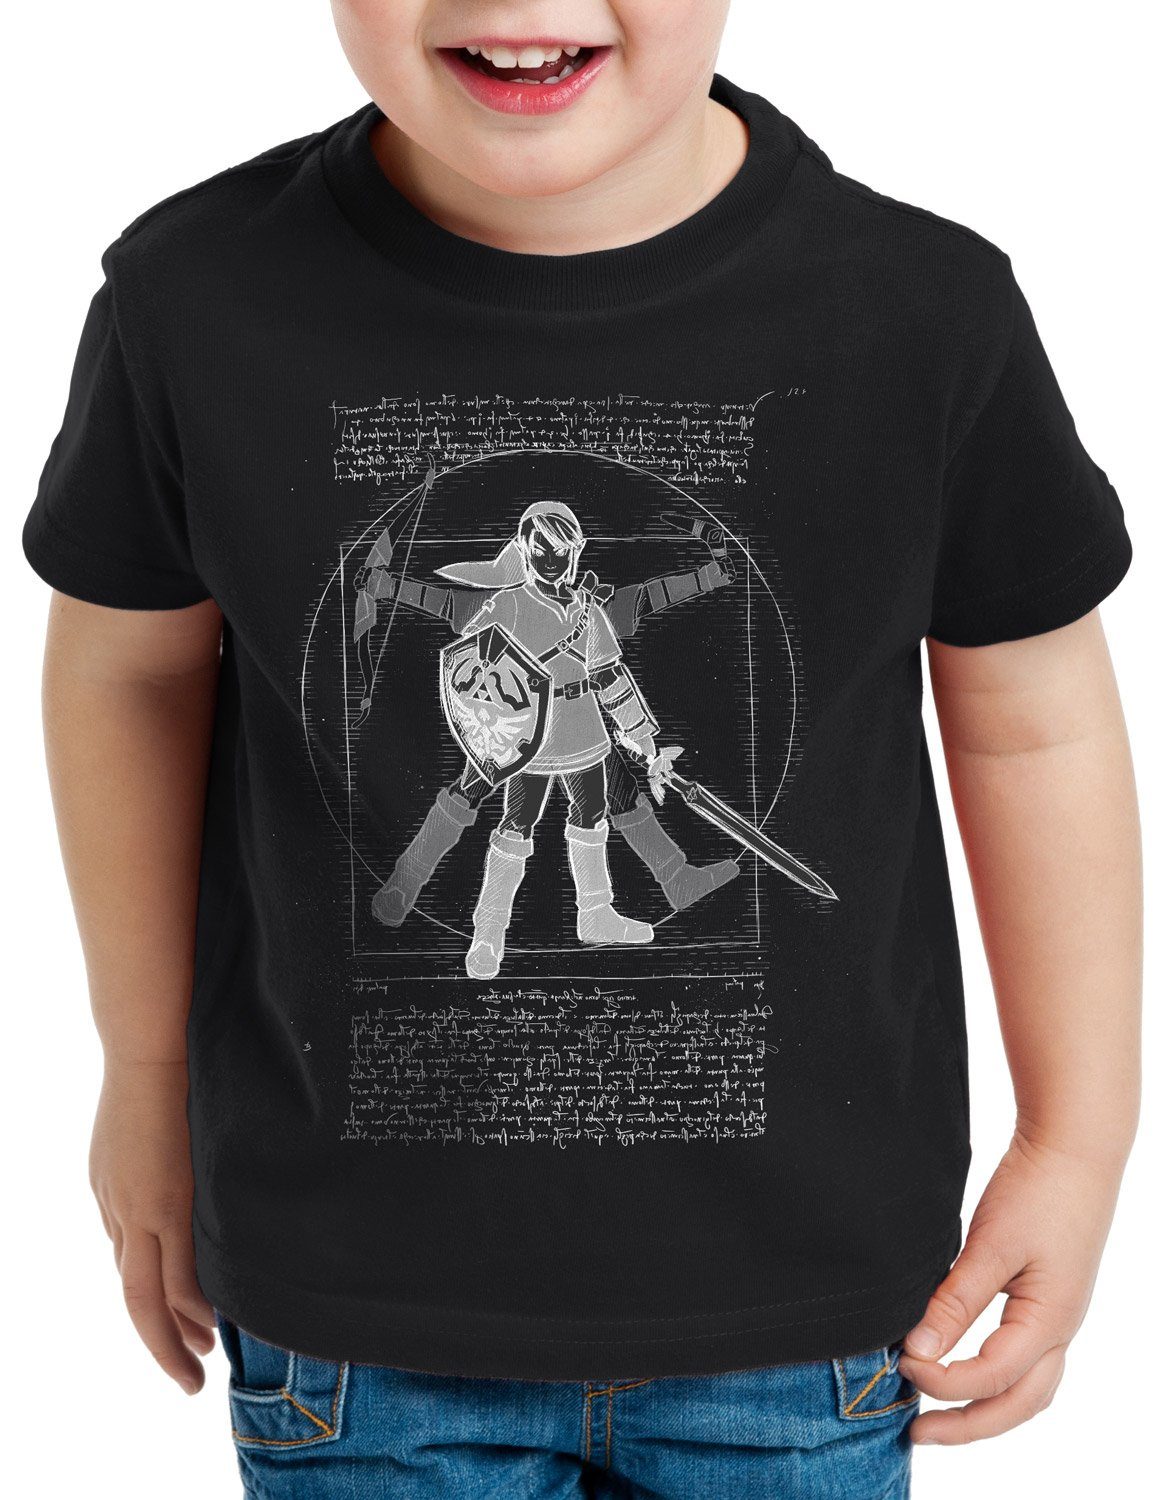 style3 Print-Shirt T-Shirt legend snes Vitruvianischer Link Kinder ocarina nes schwarz zelda